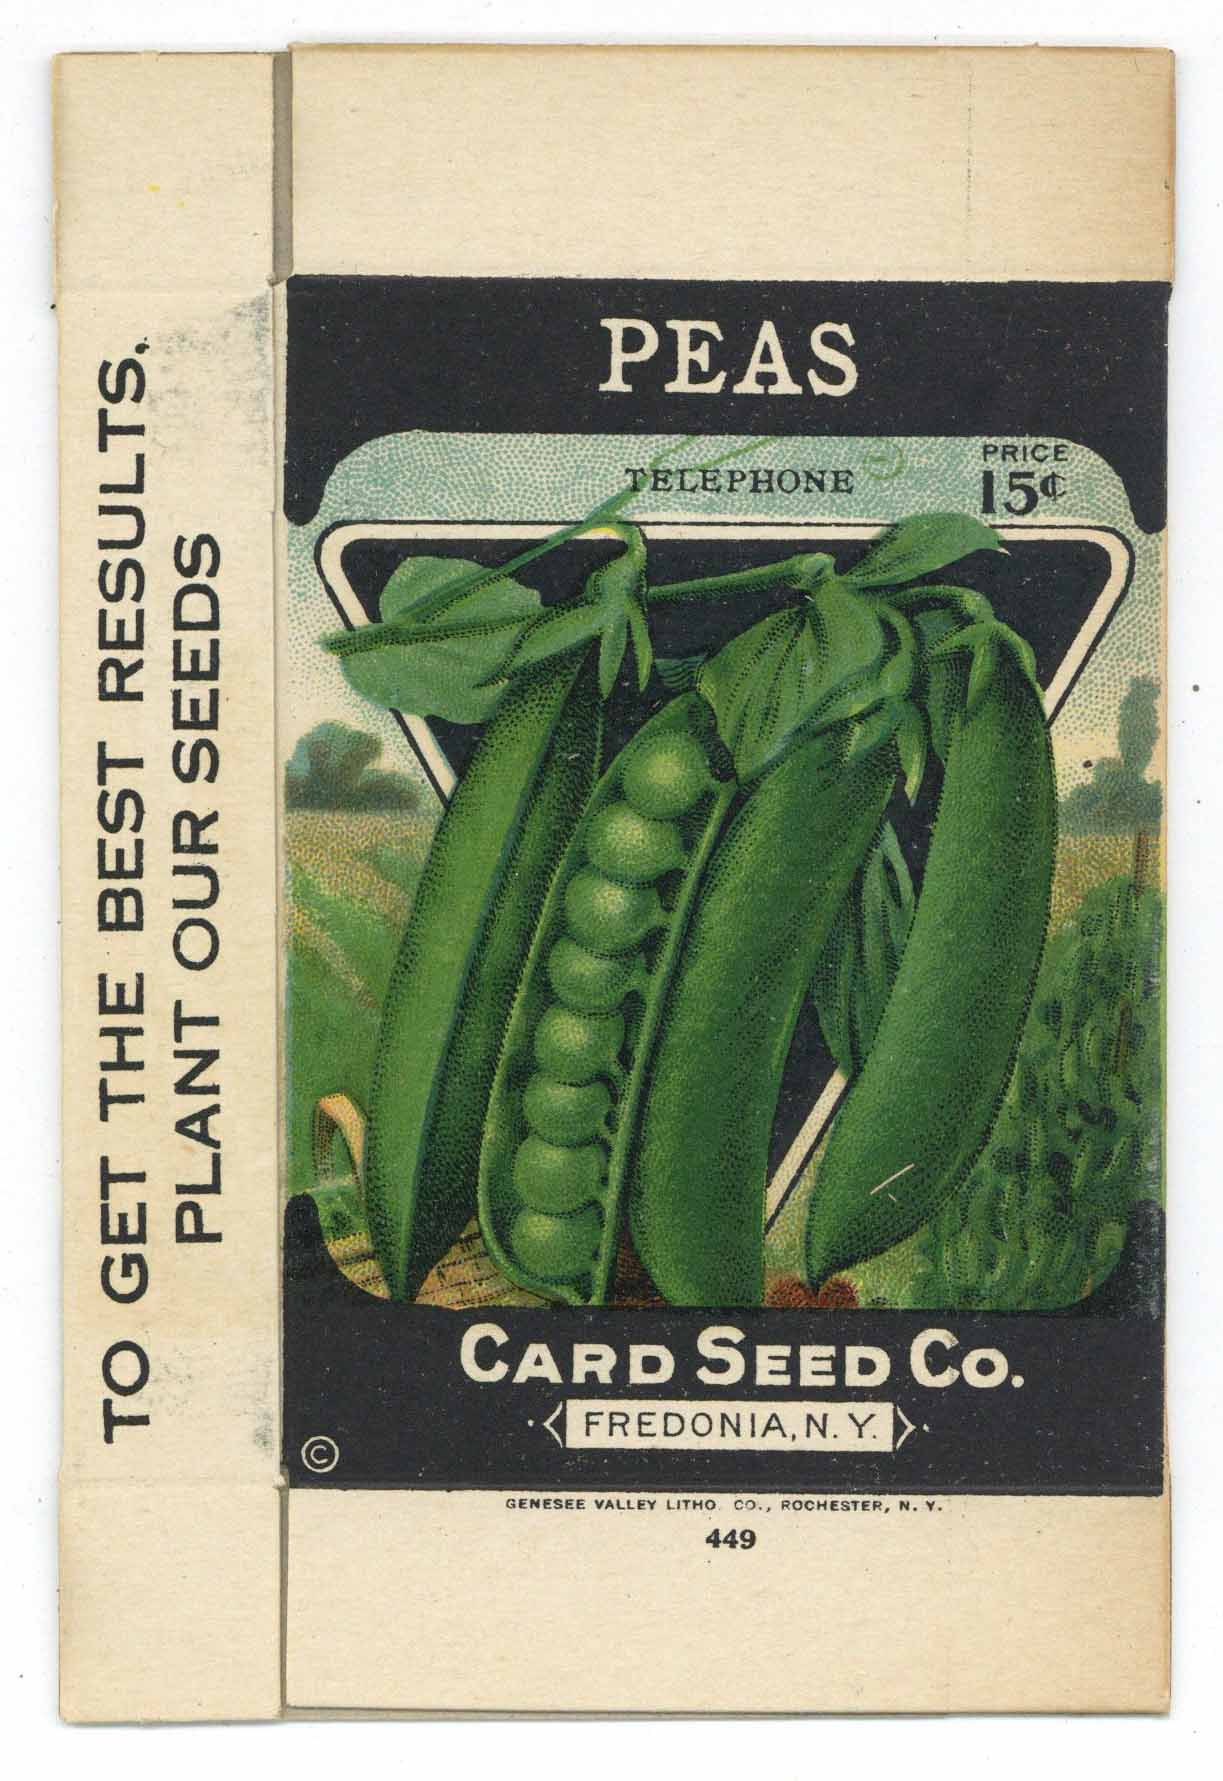 Peas Antique Card Seed Co. Box, Telephone